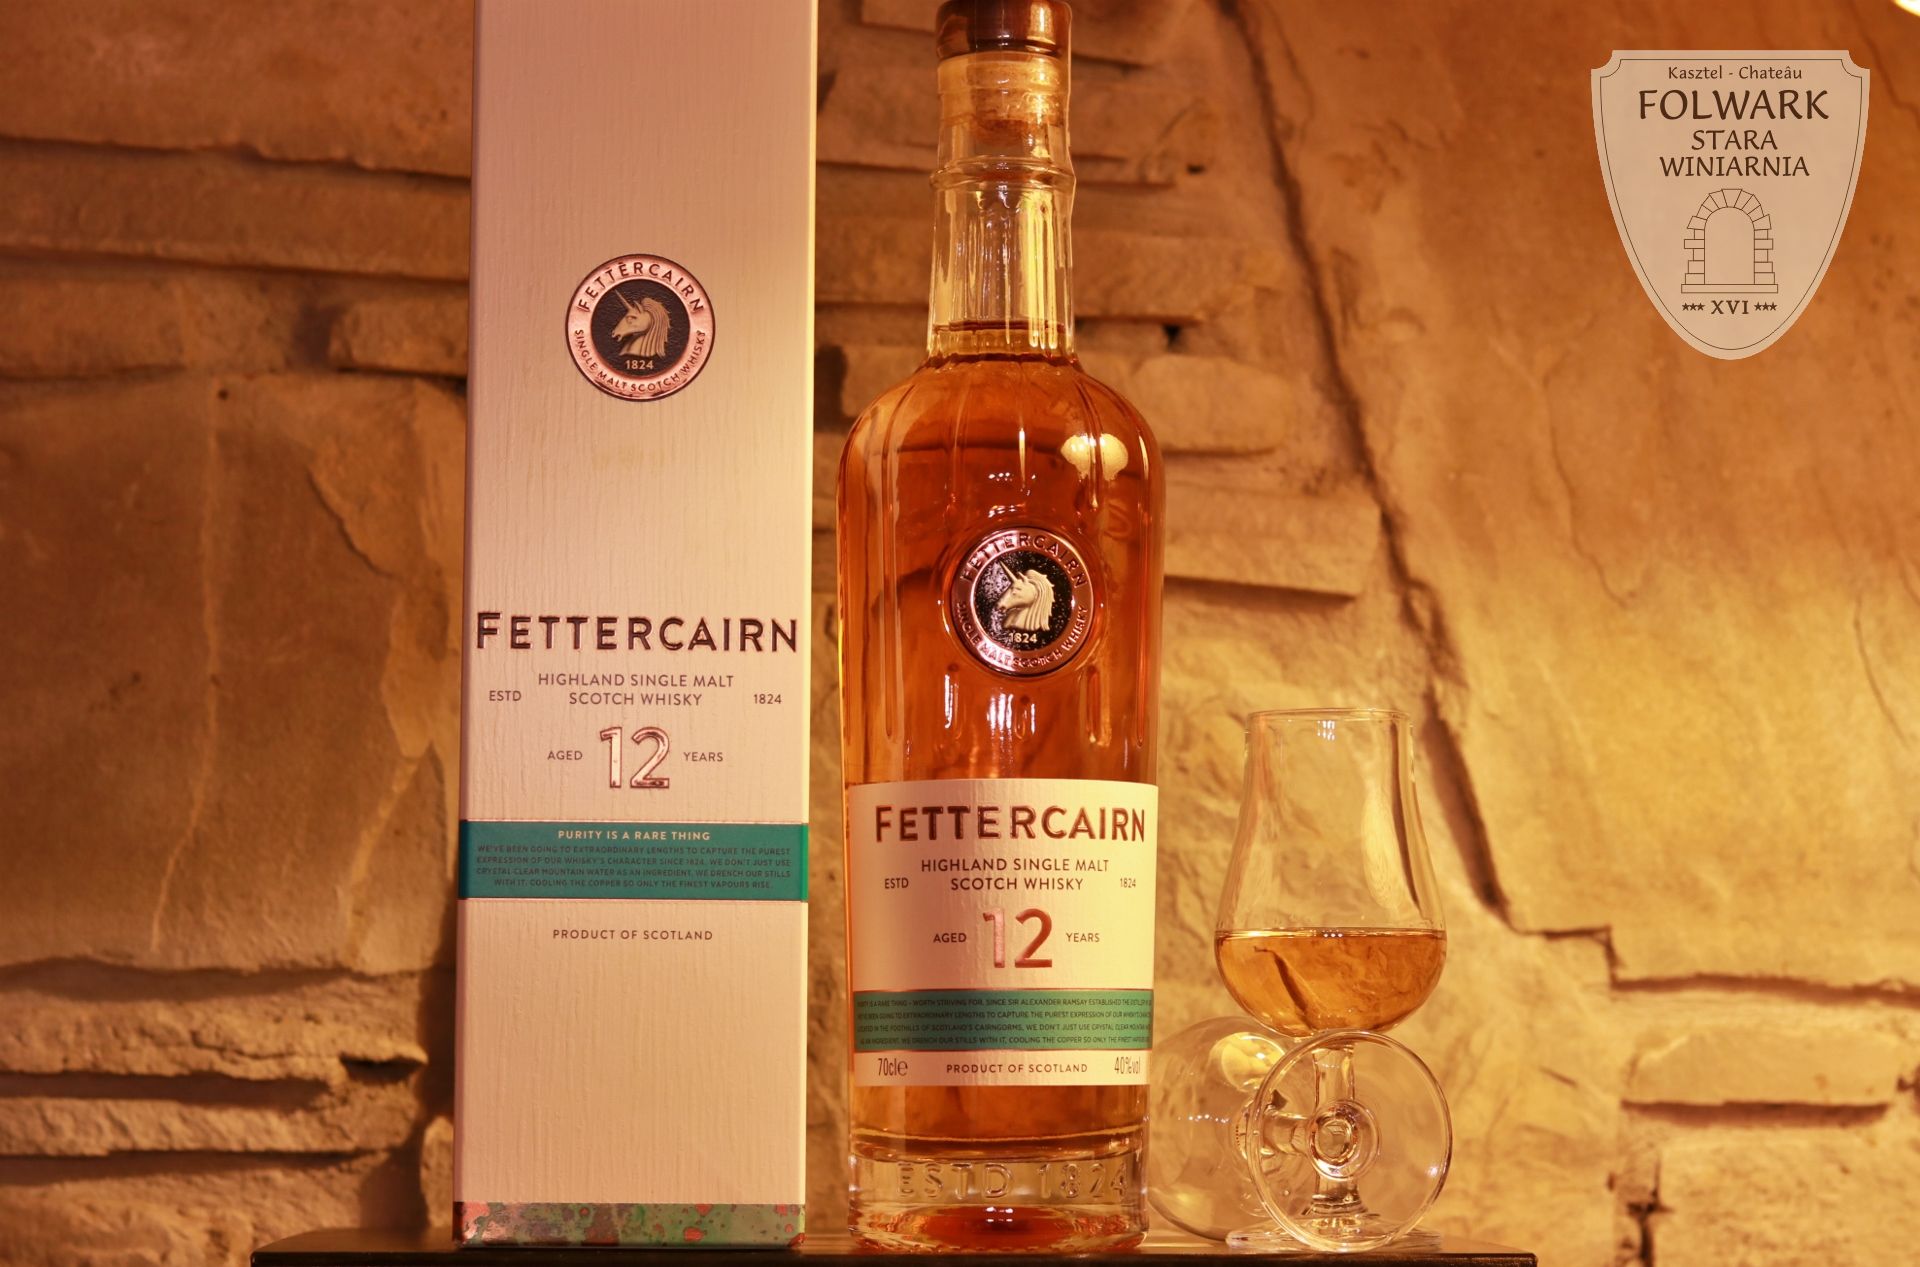 Fettercairn 12 YO Highland Single Malt Scotch Whisky